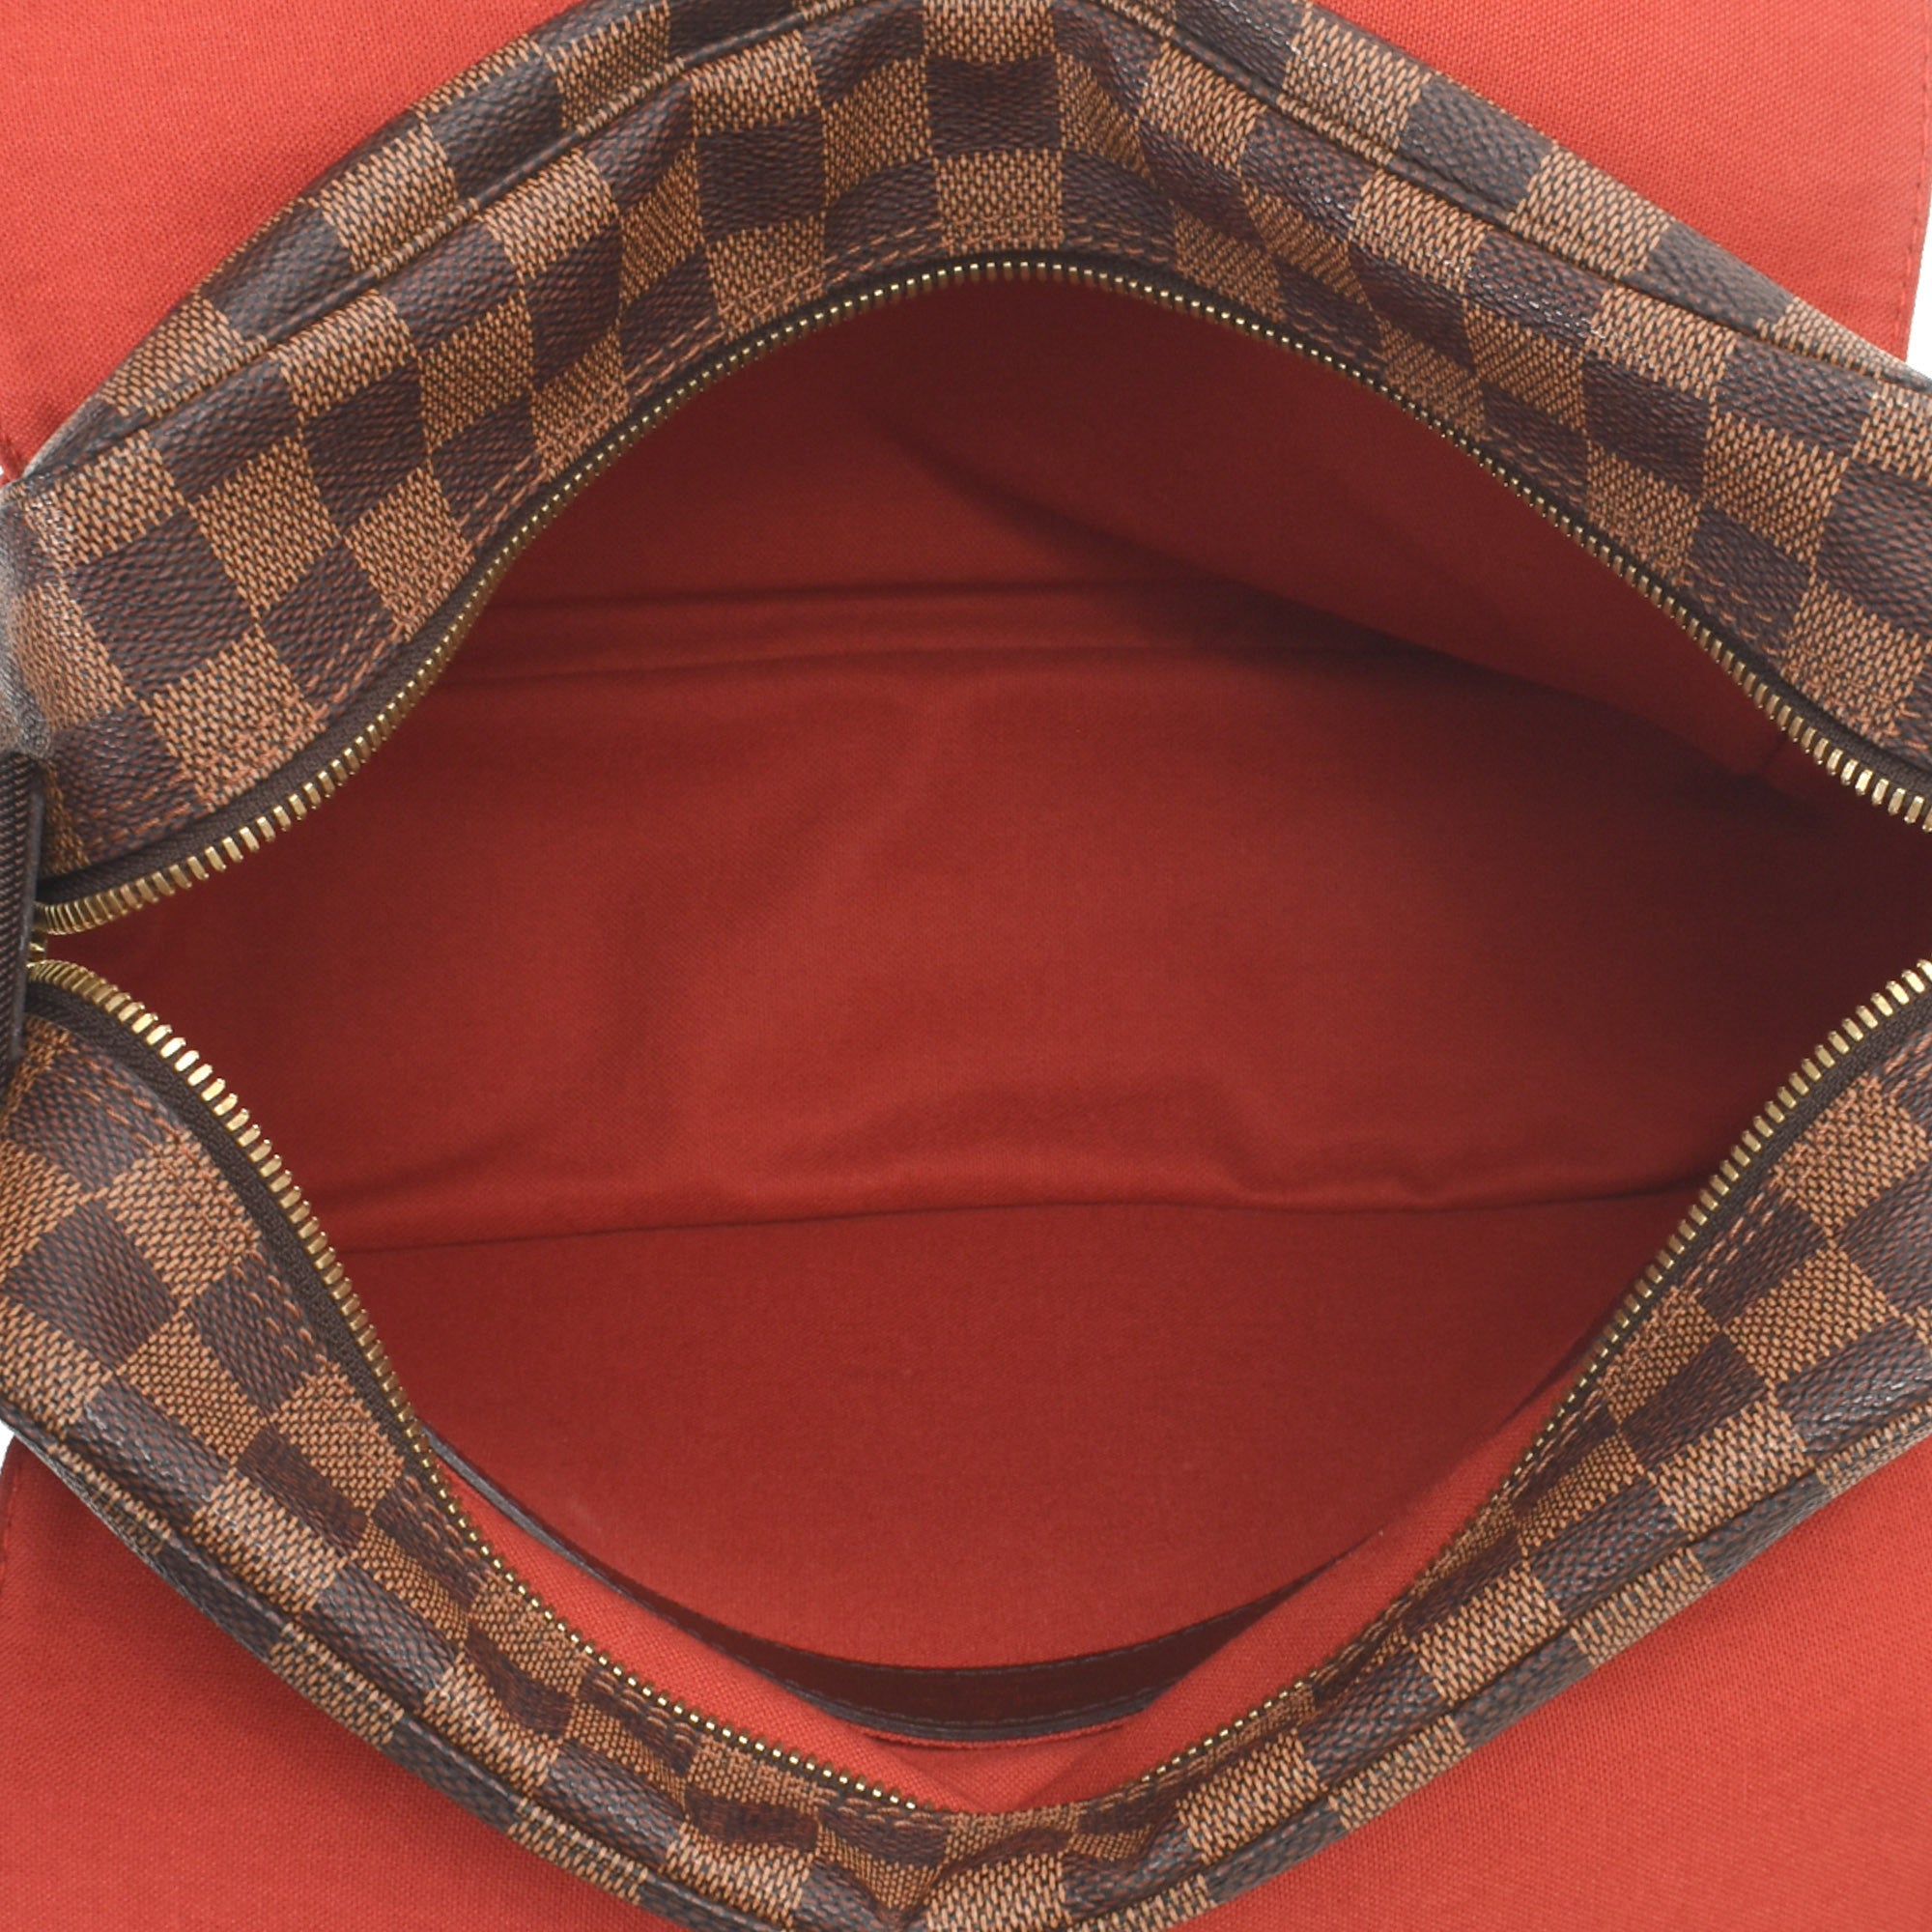 Louis Vuitton Naviglio Shoulder bag 376160